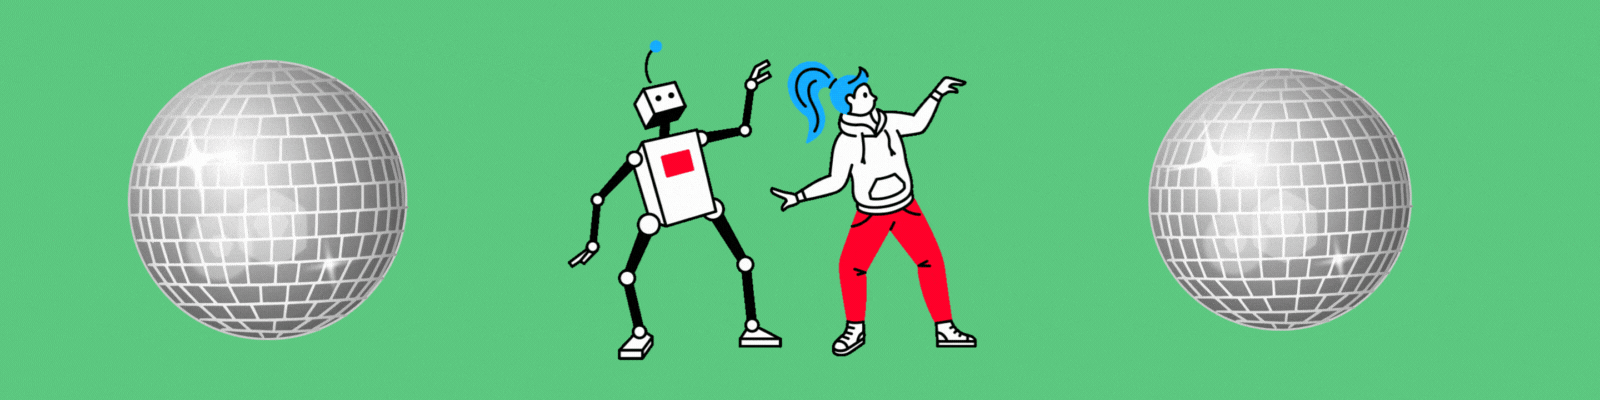 Cornice con robot e ragazza che ballano